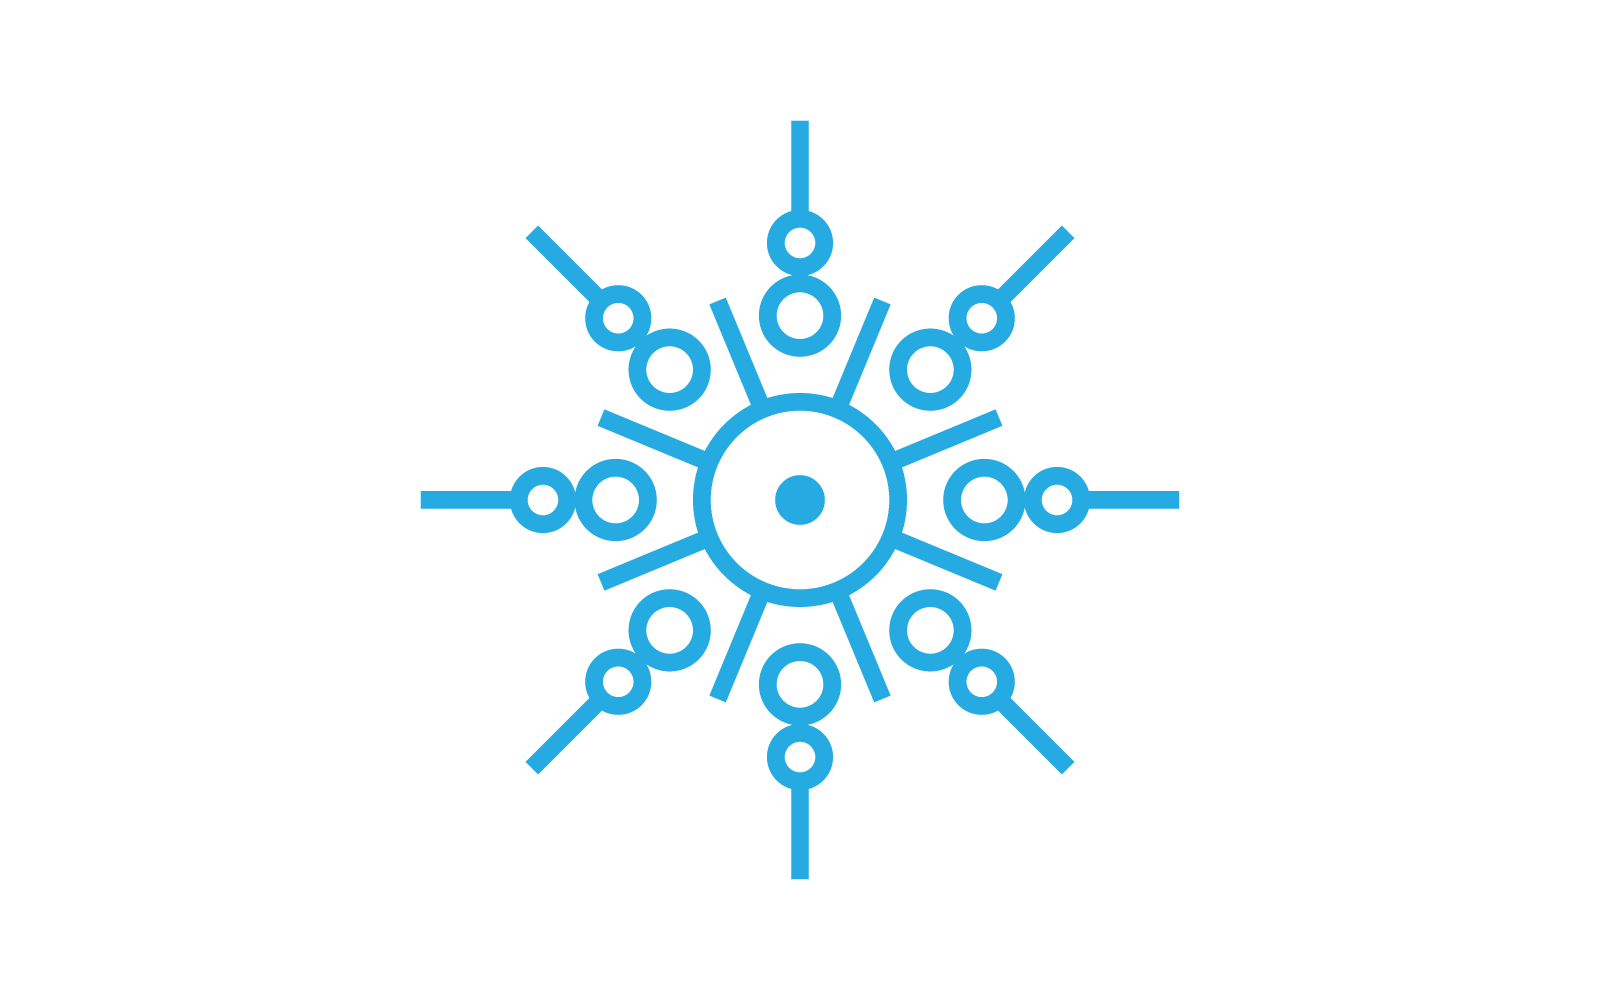 Snowflakes icon and symbol illustration flat design